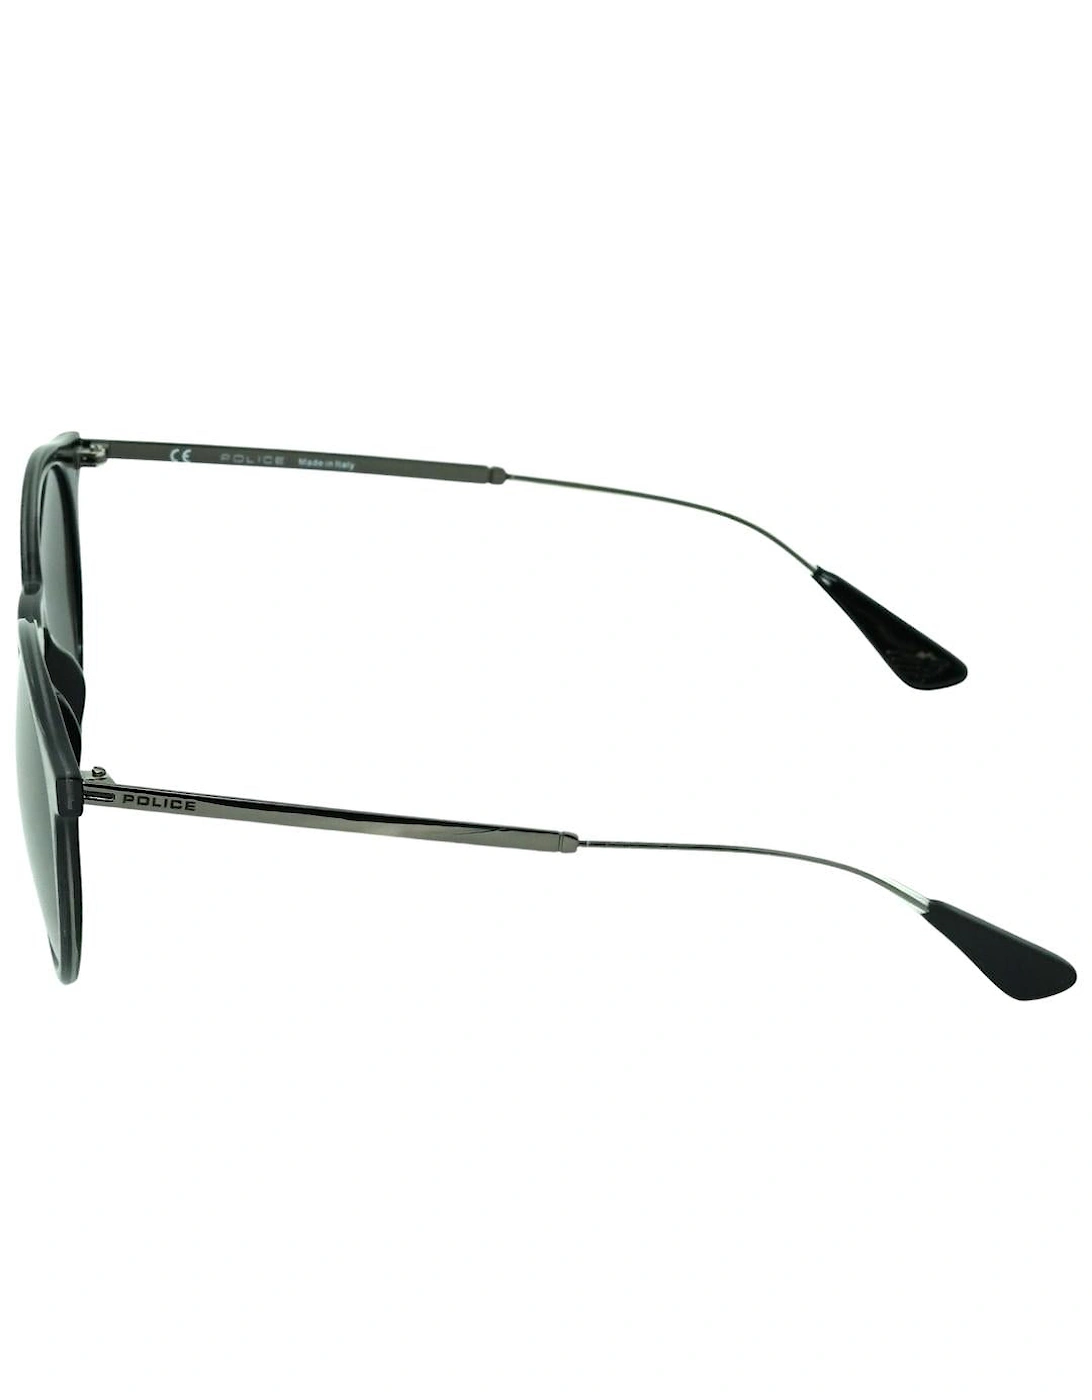 SPL775M 01EN Silver Sunglasses